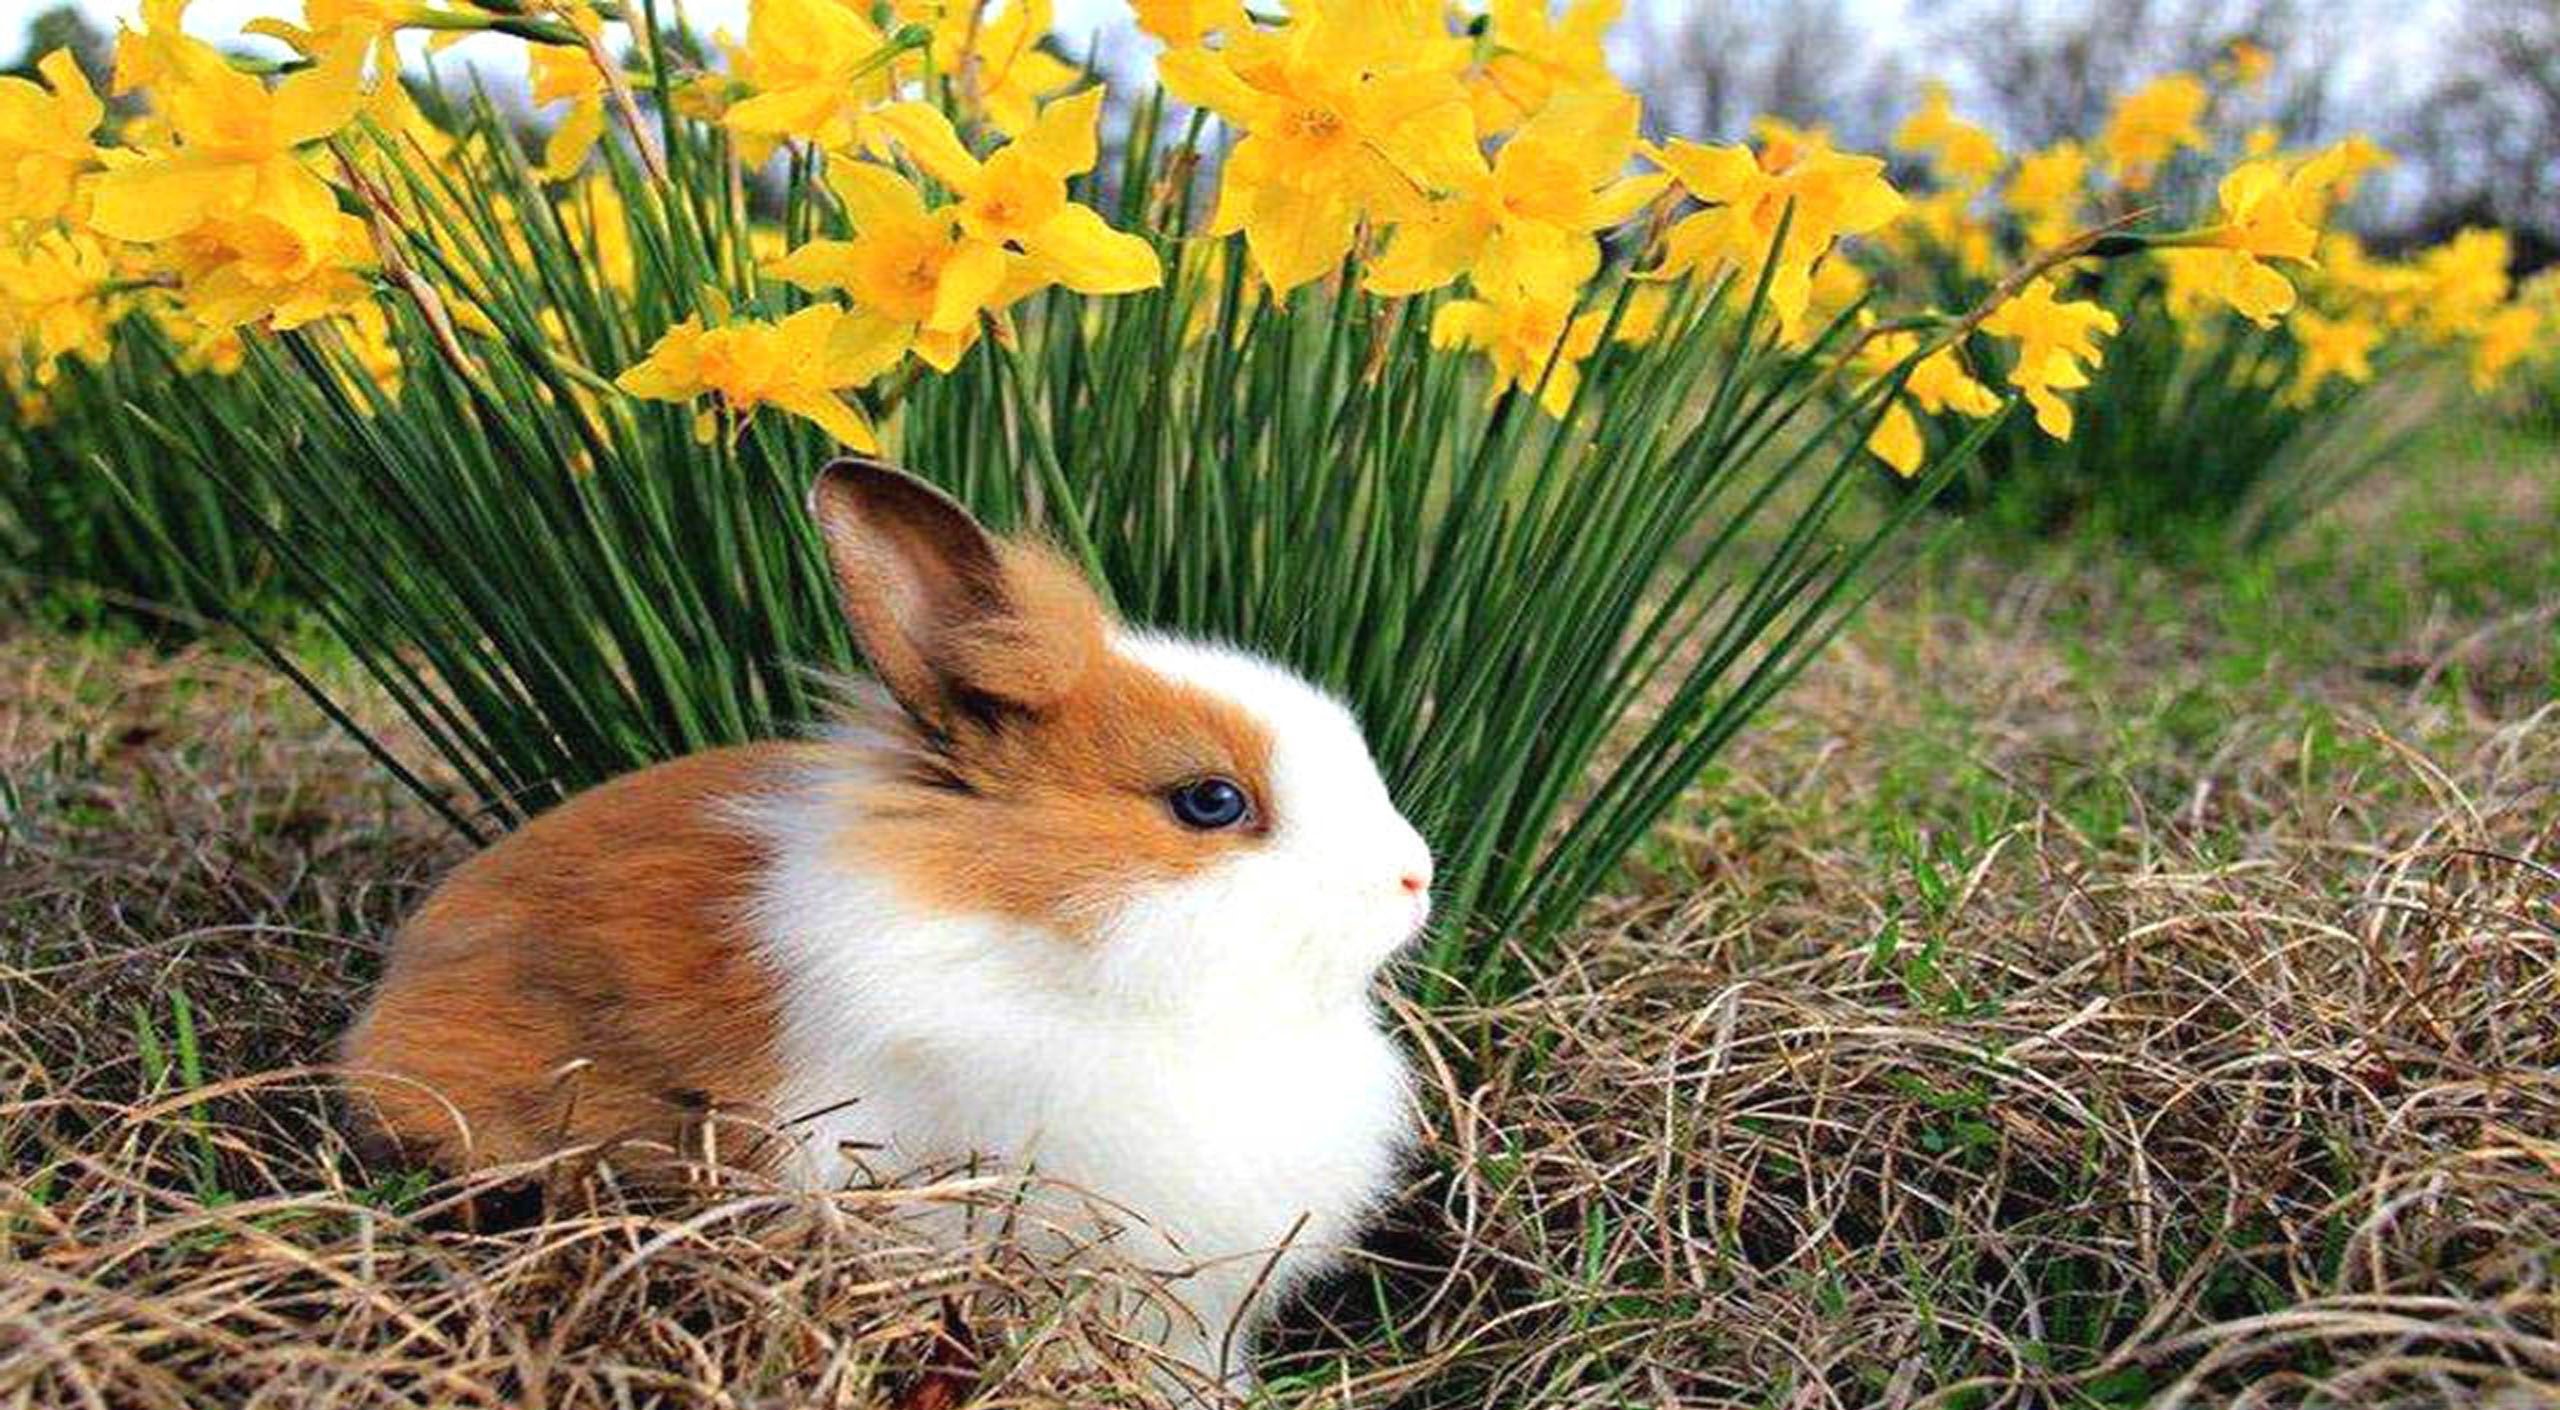 عکس خرگوش خوشگل کنار گل نرگس زرد در فصل بهار